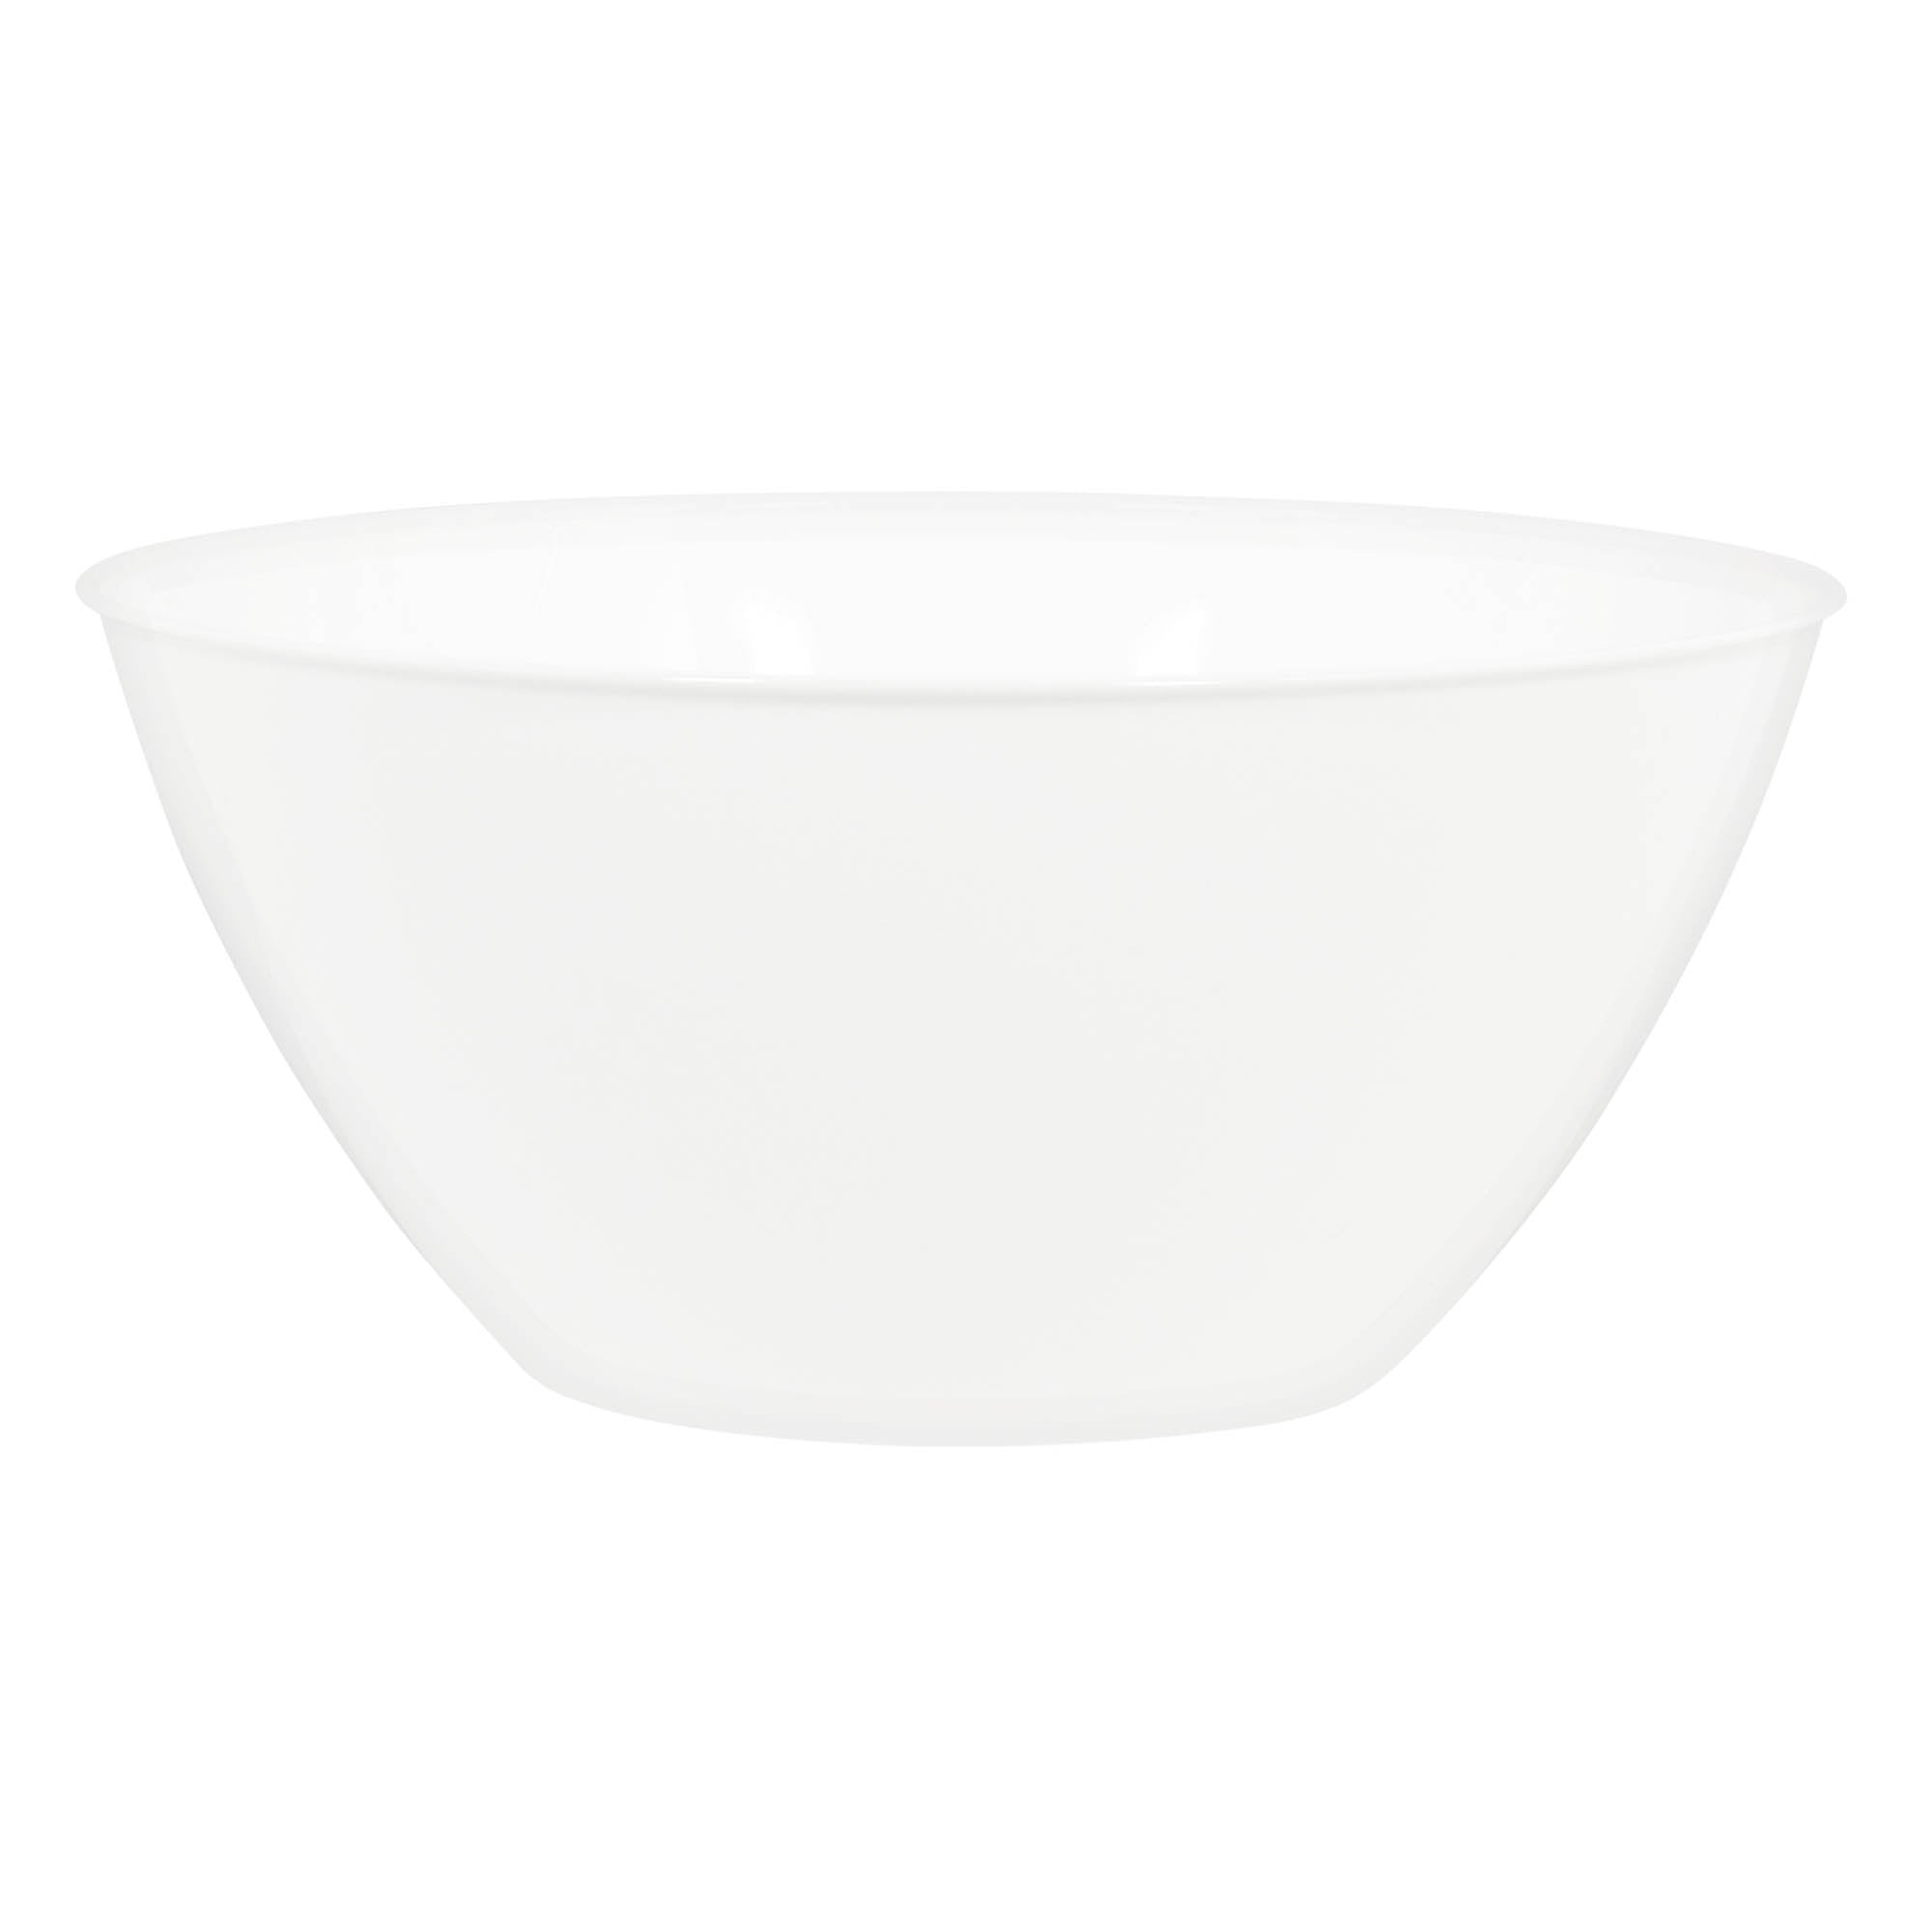 Plastic Bowl  Frosty White  5qts